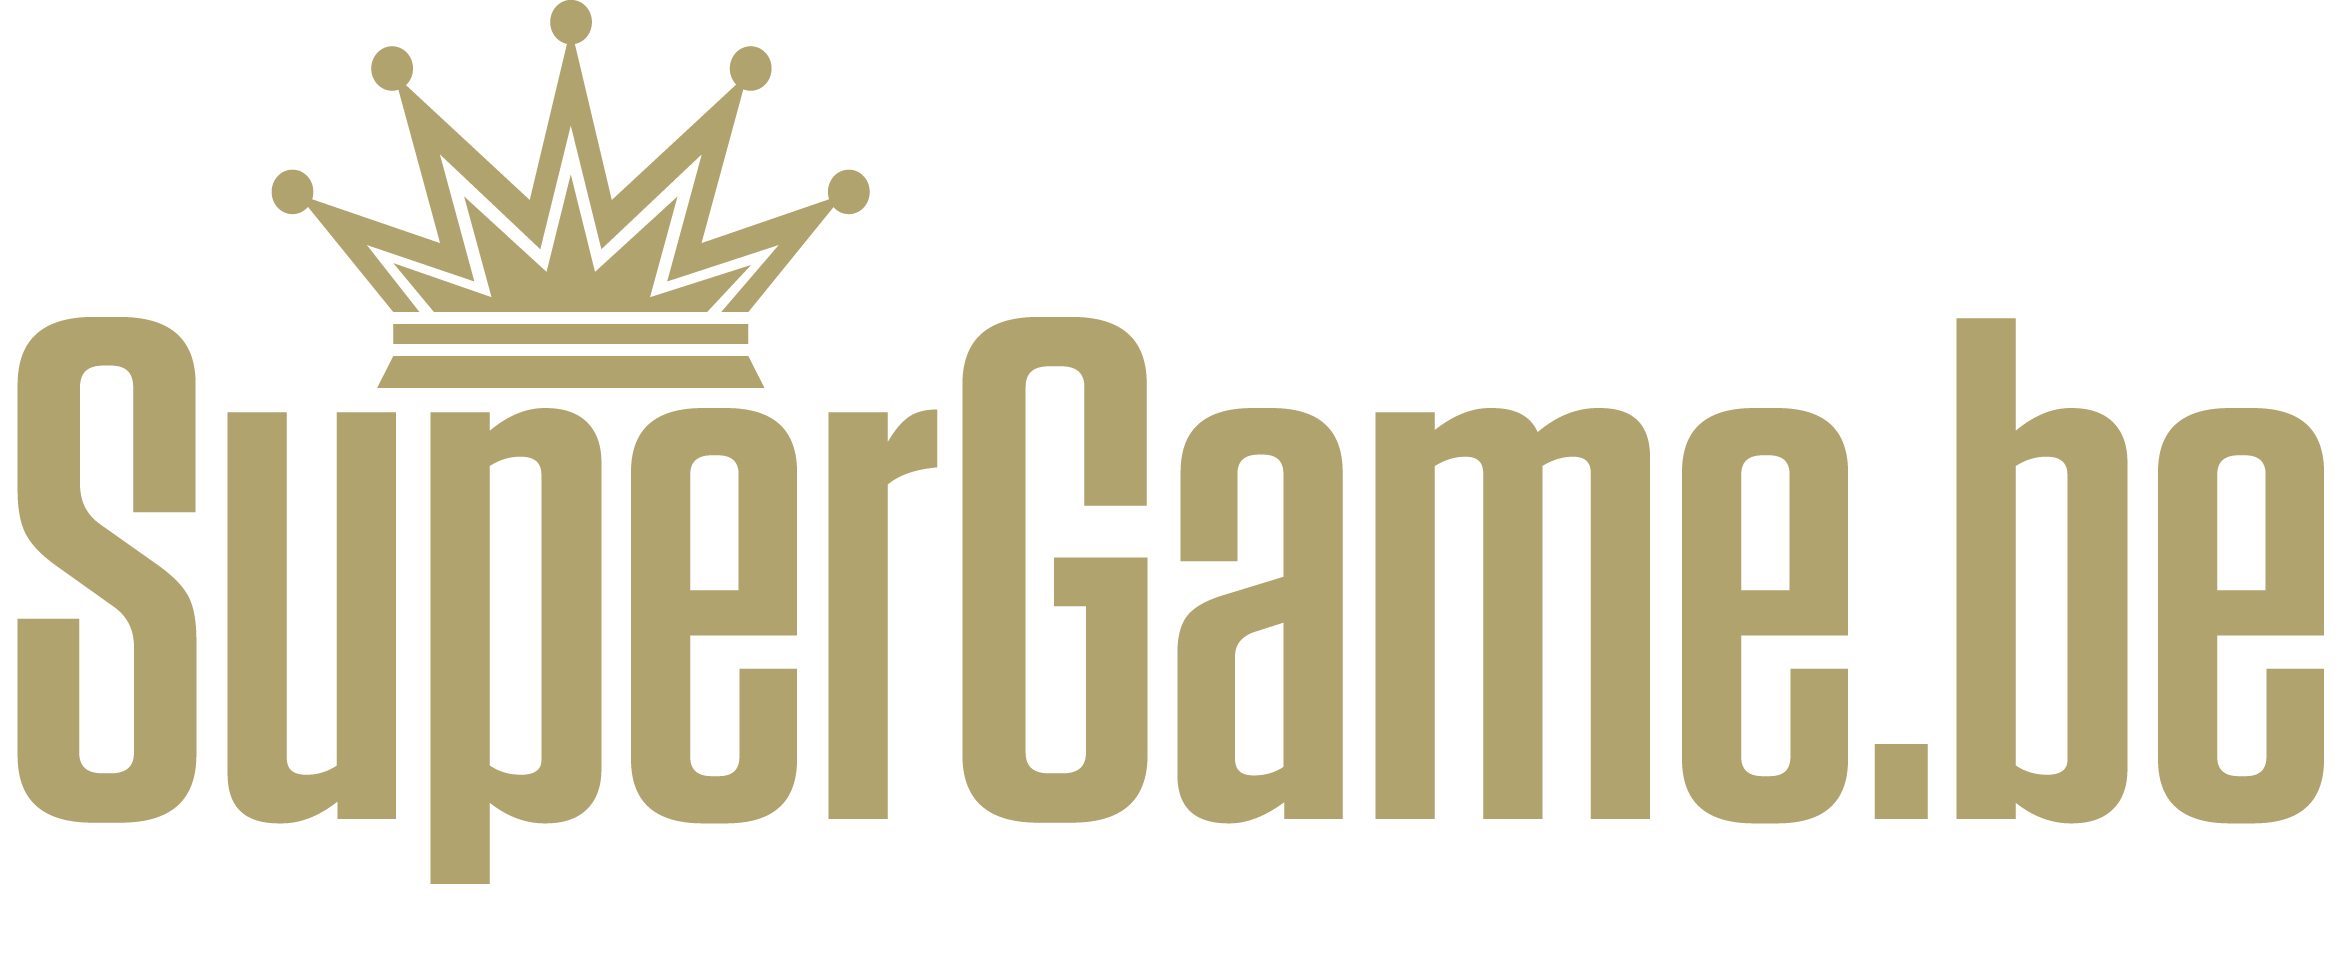 Supergame logo